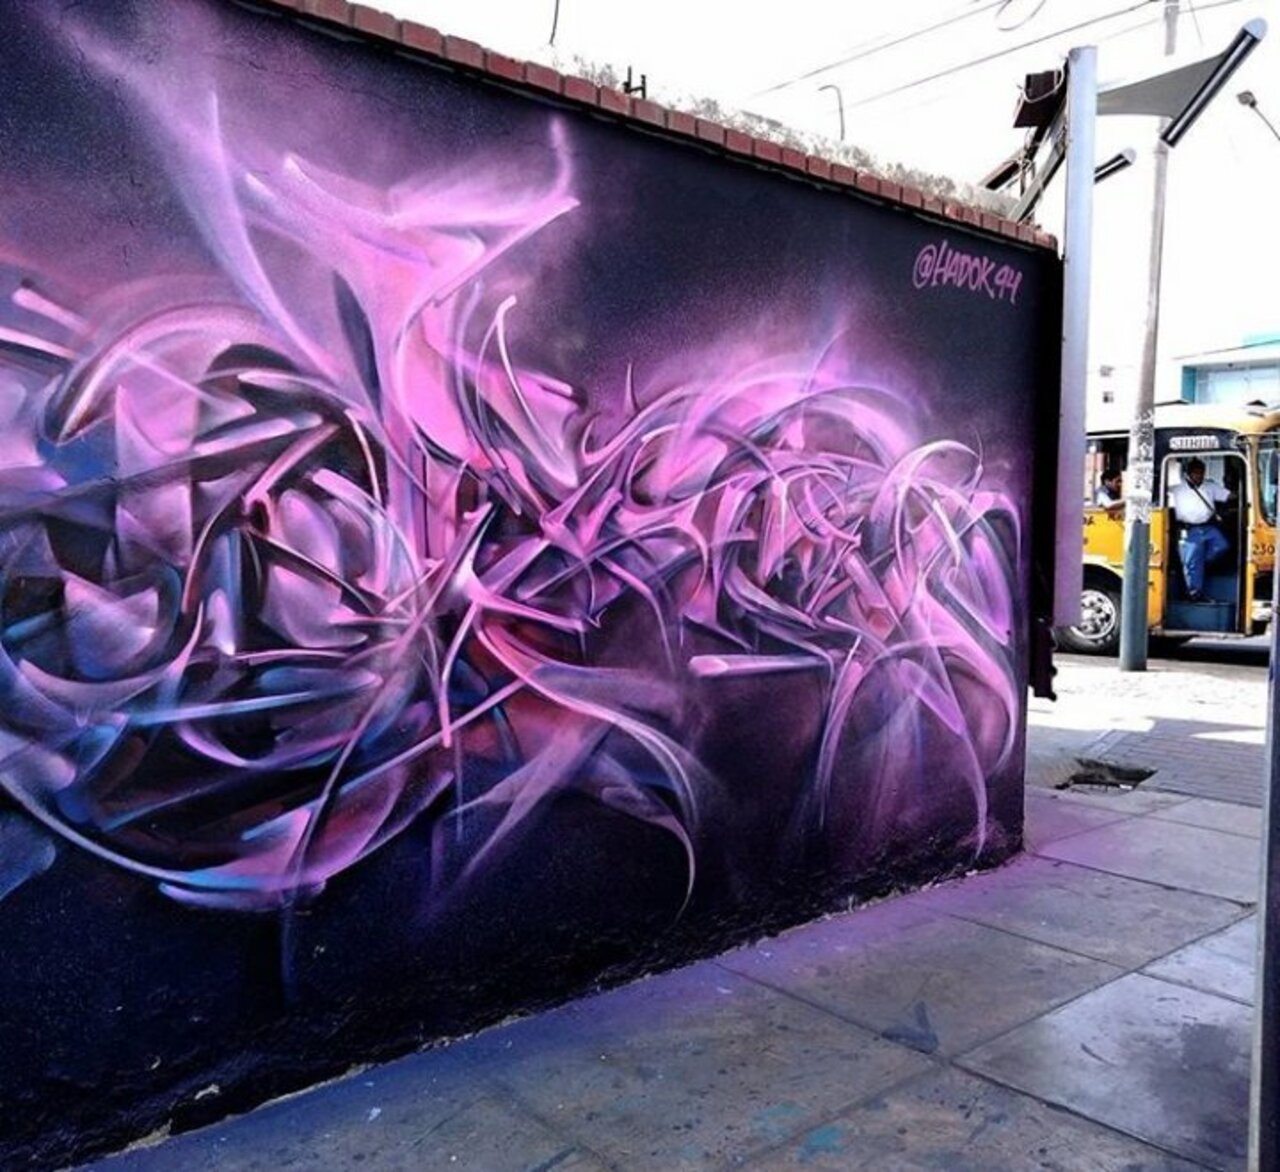 Straight Up graffiti... #WildStyle #streetart #graffiti https://t.co/r237pCluZs